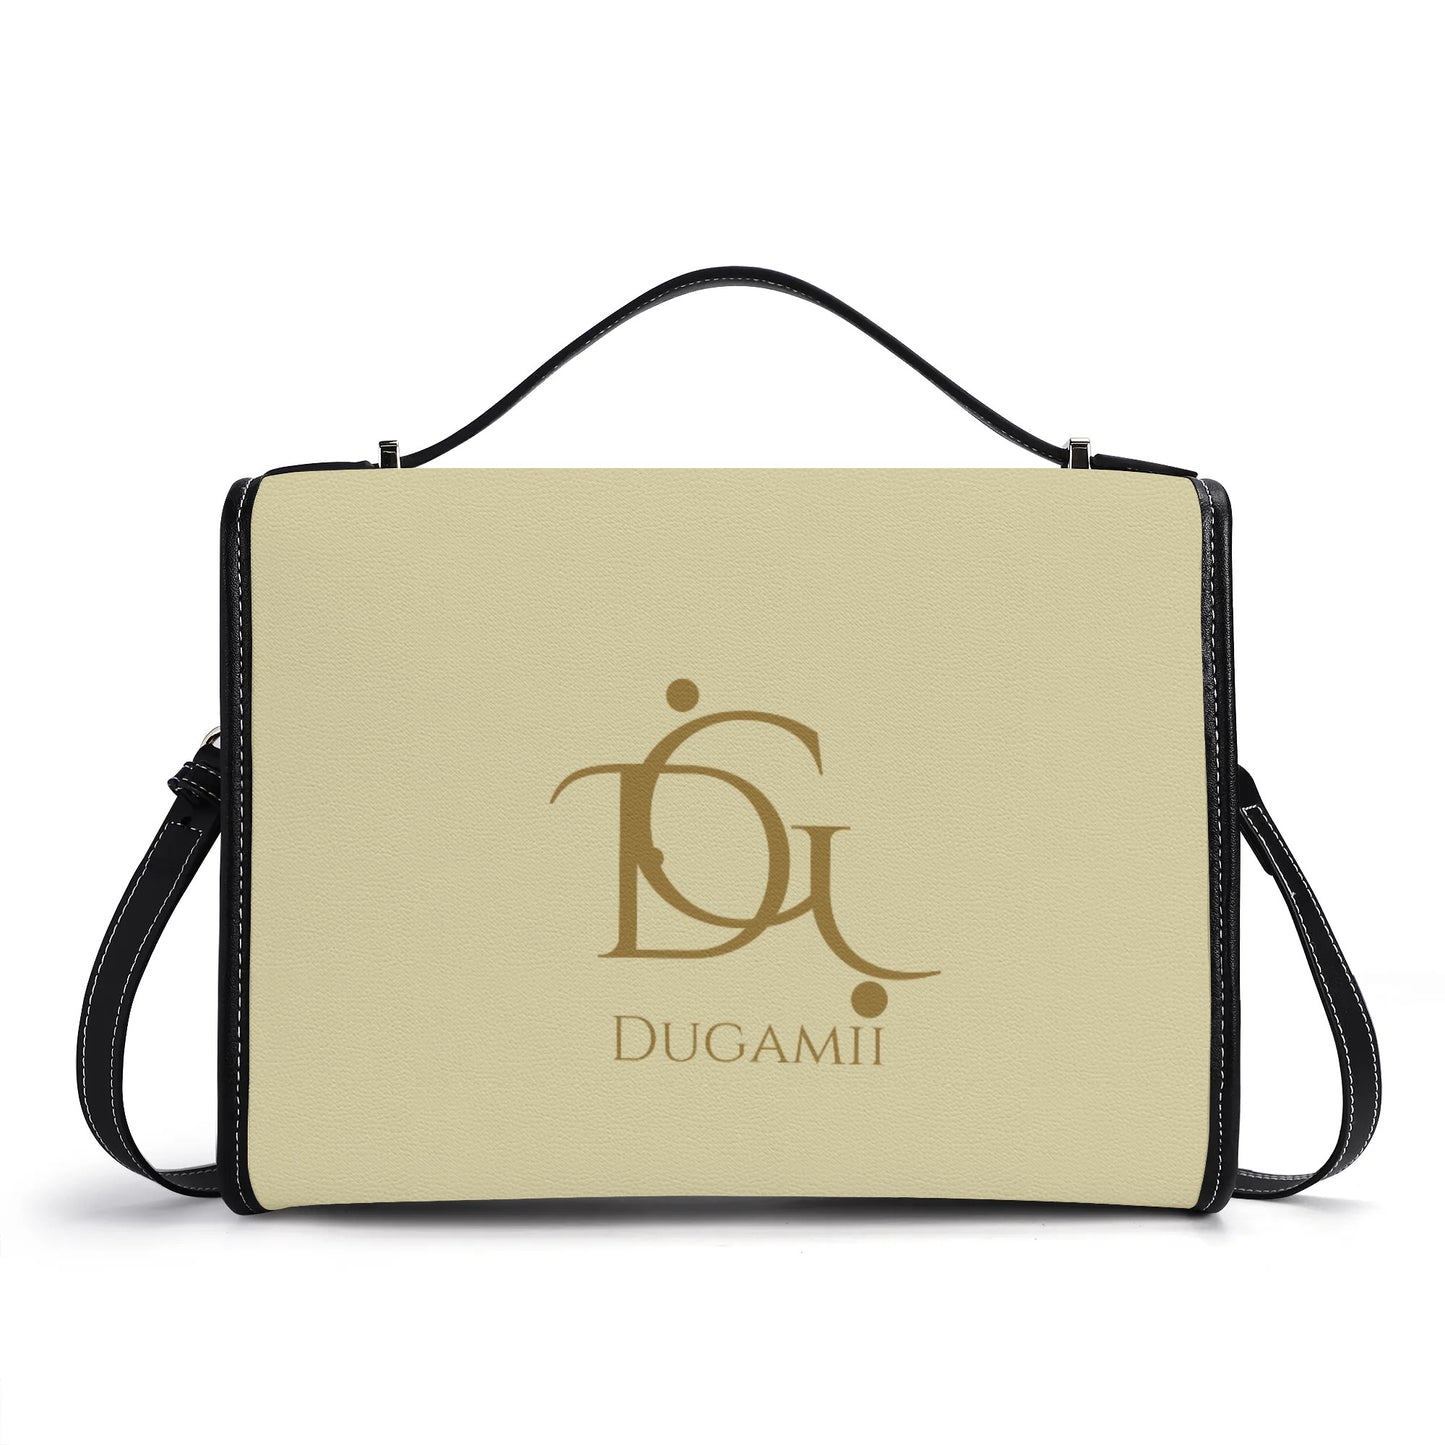 Womens DuGamii PU Leather  Bone Color Satchel Bag